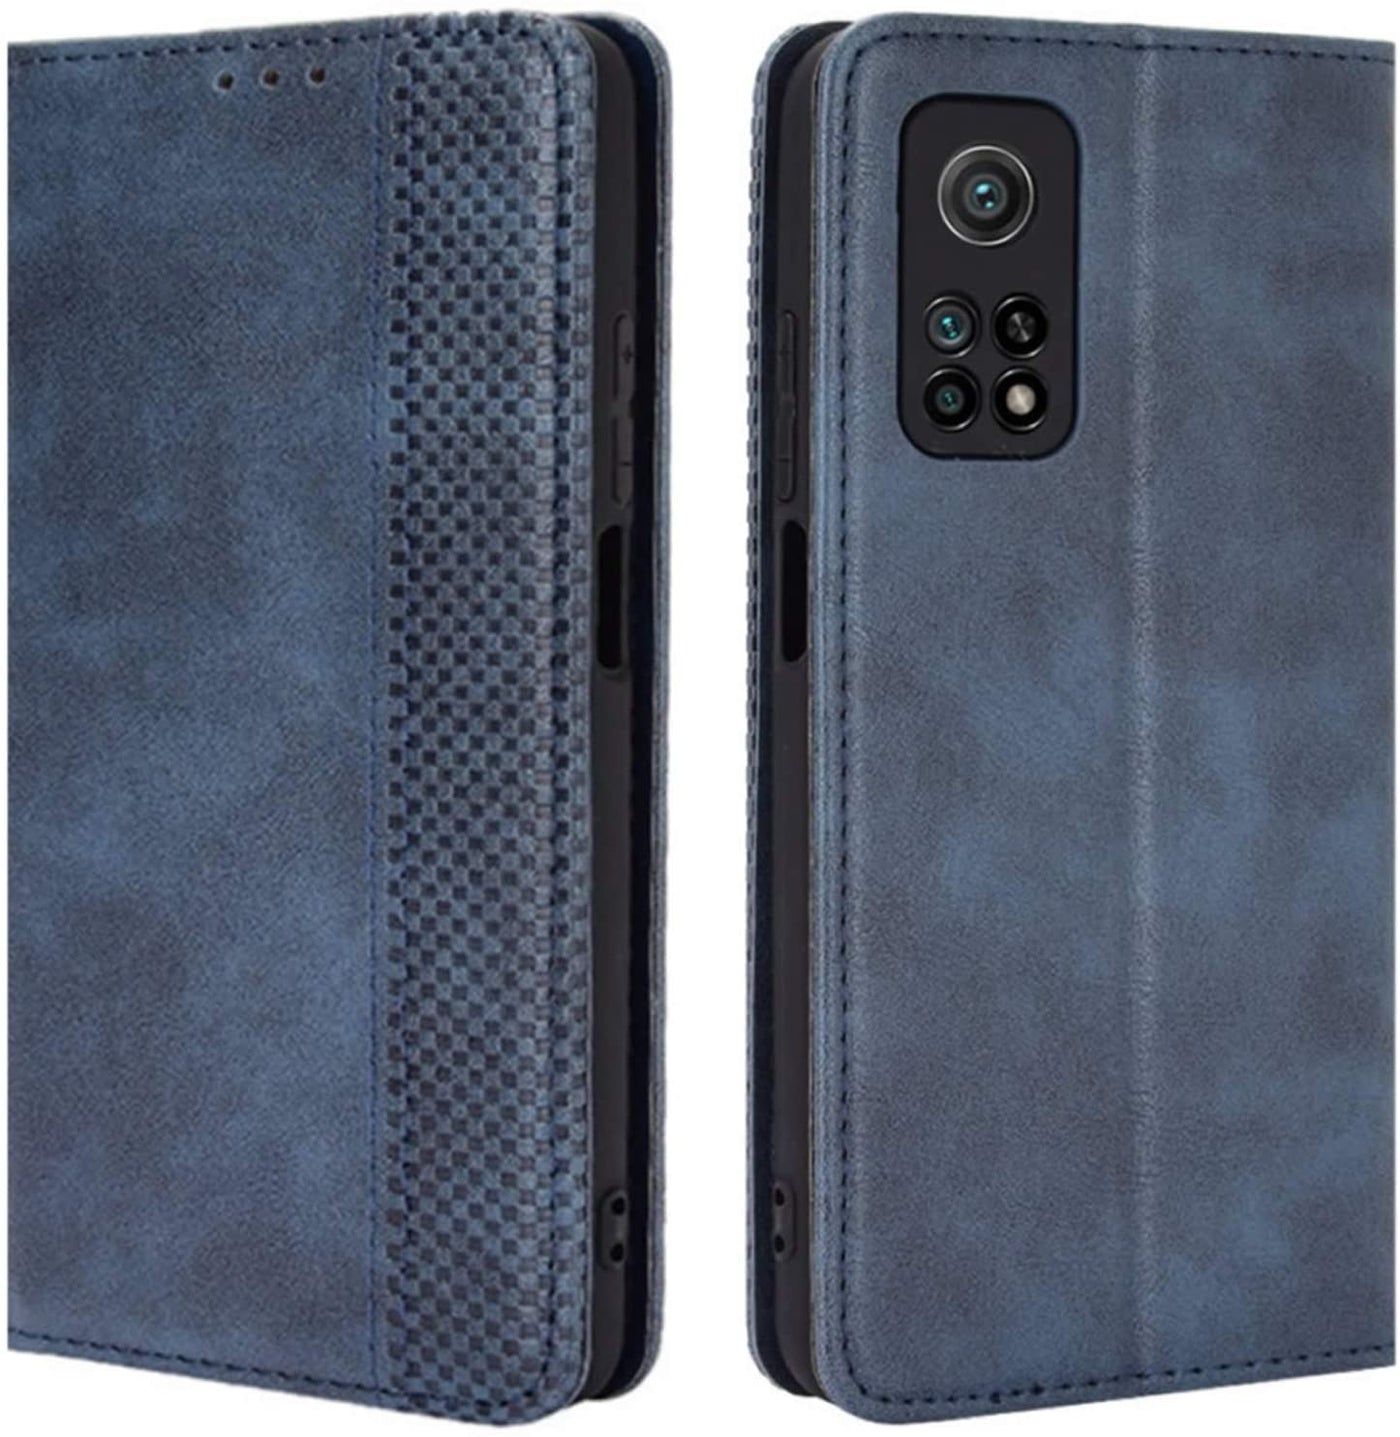 Xiaomi Mi 10T blue color leather wallet flip cover case By excelsior